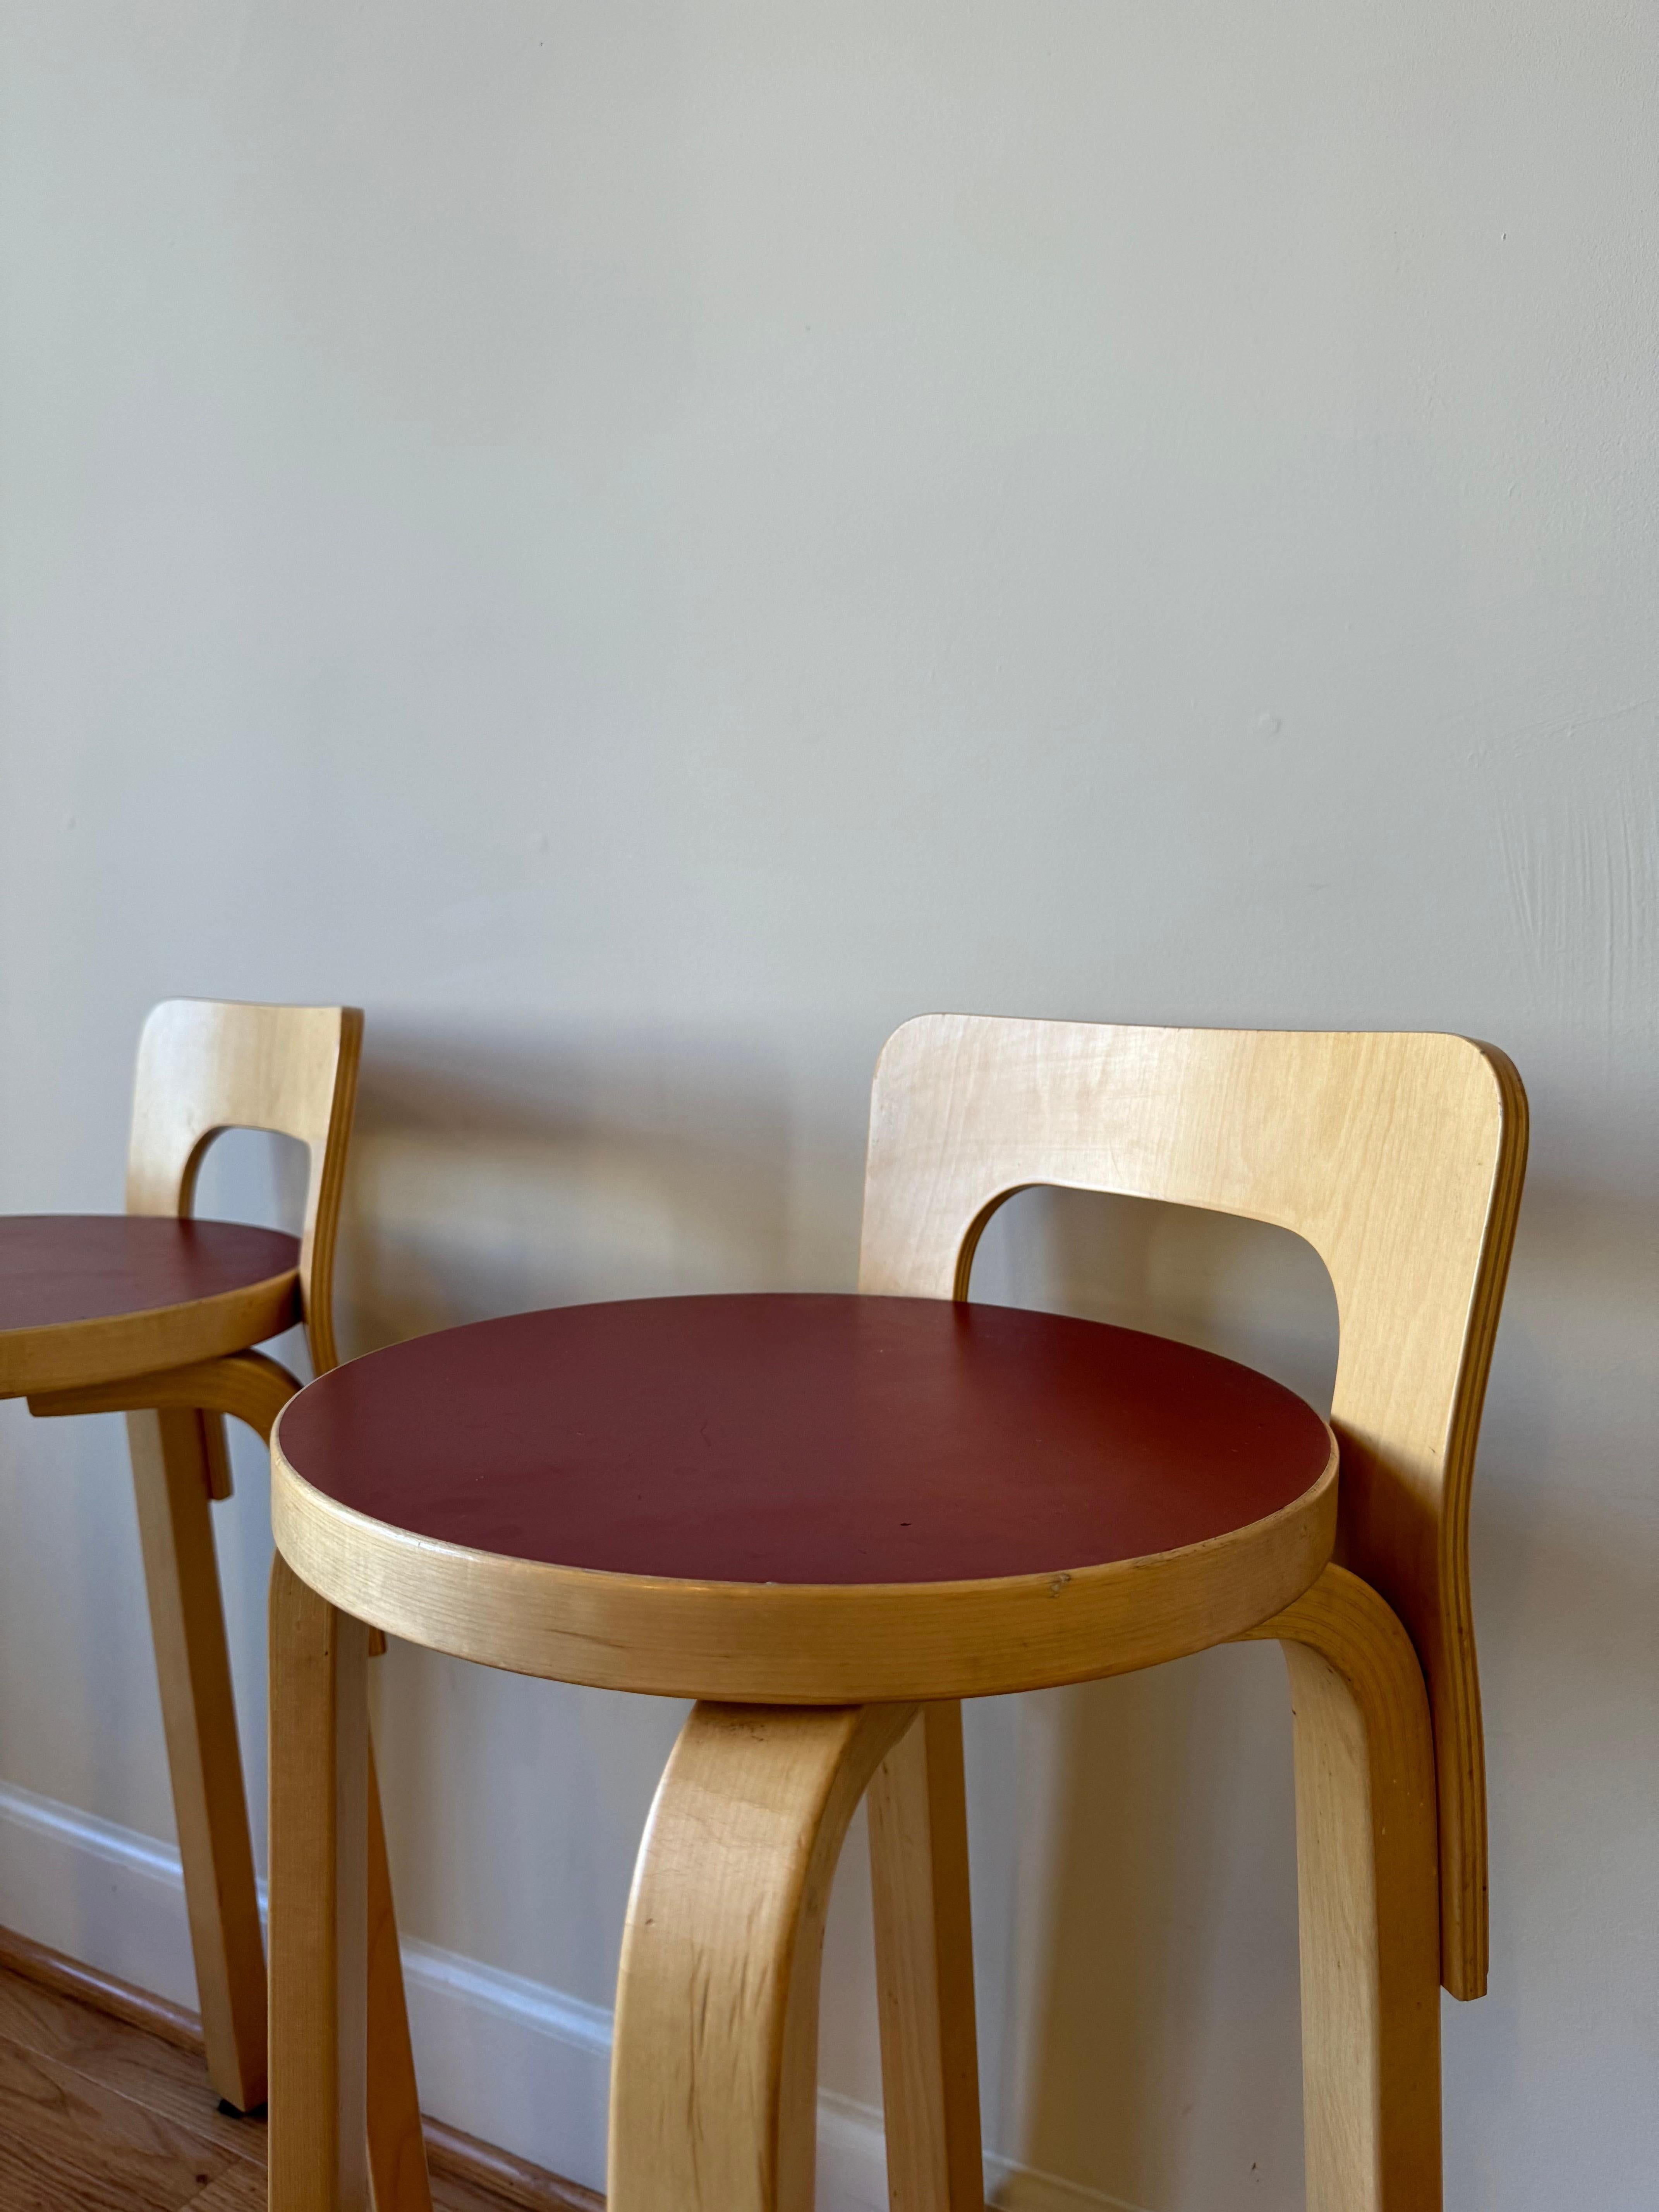 High Chair K65 by Alvar Aalto for Artek (Red Linoleum seat) 1